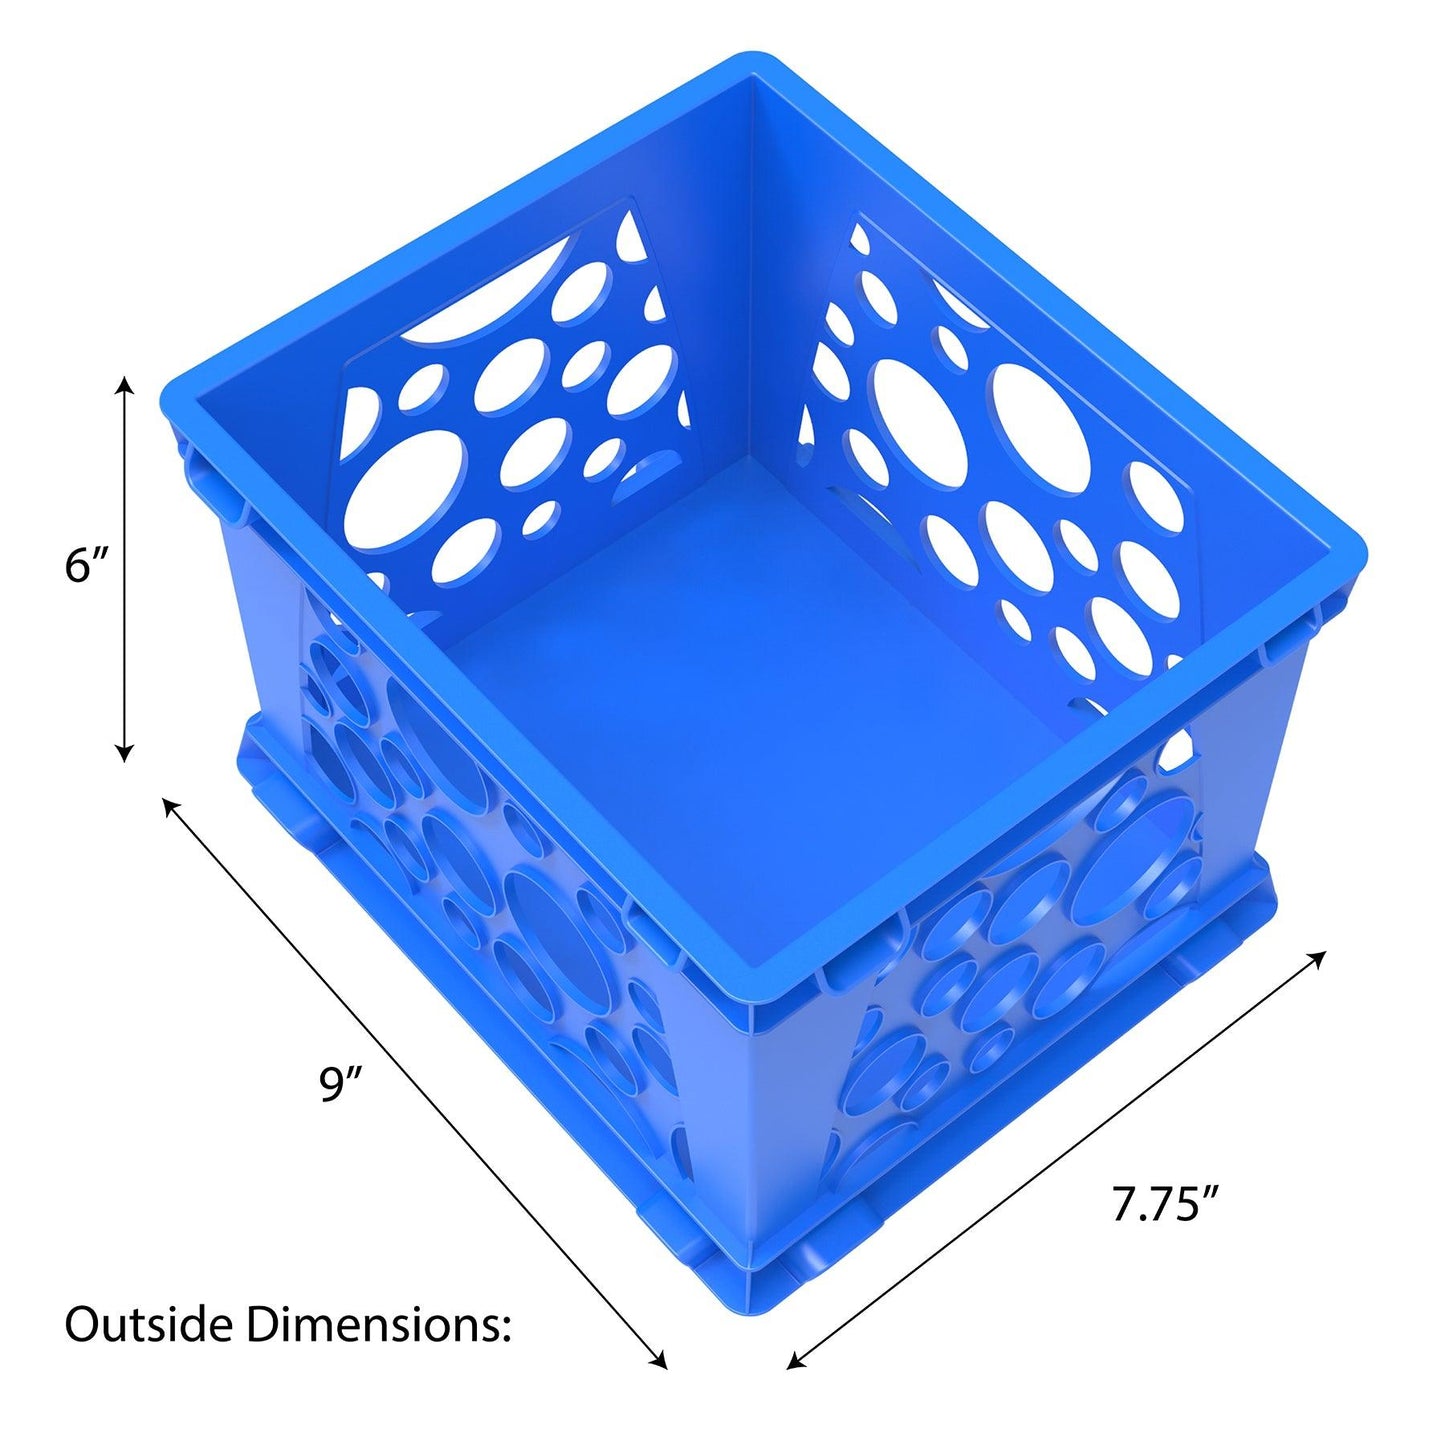 Mini Crate, Blue, 12-Pack - Loomini